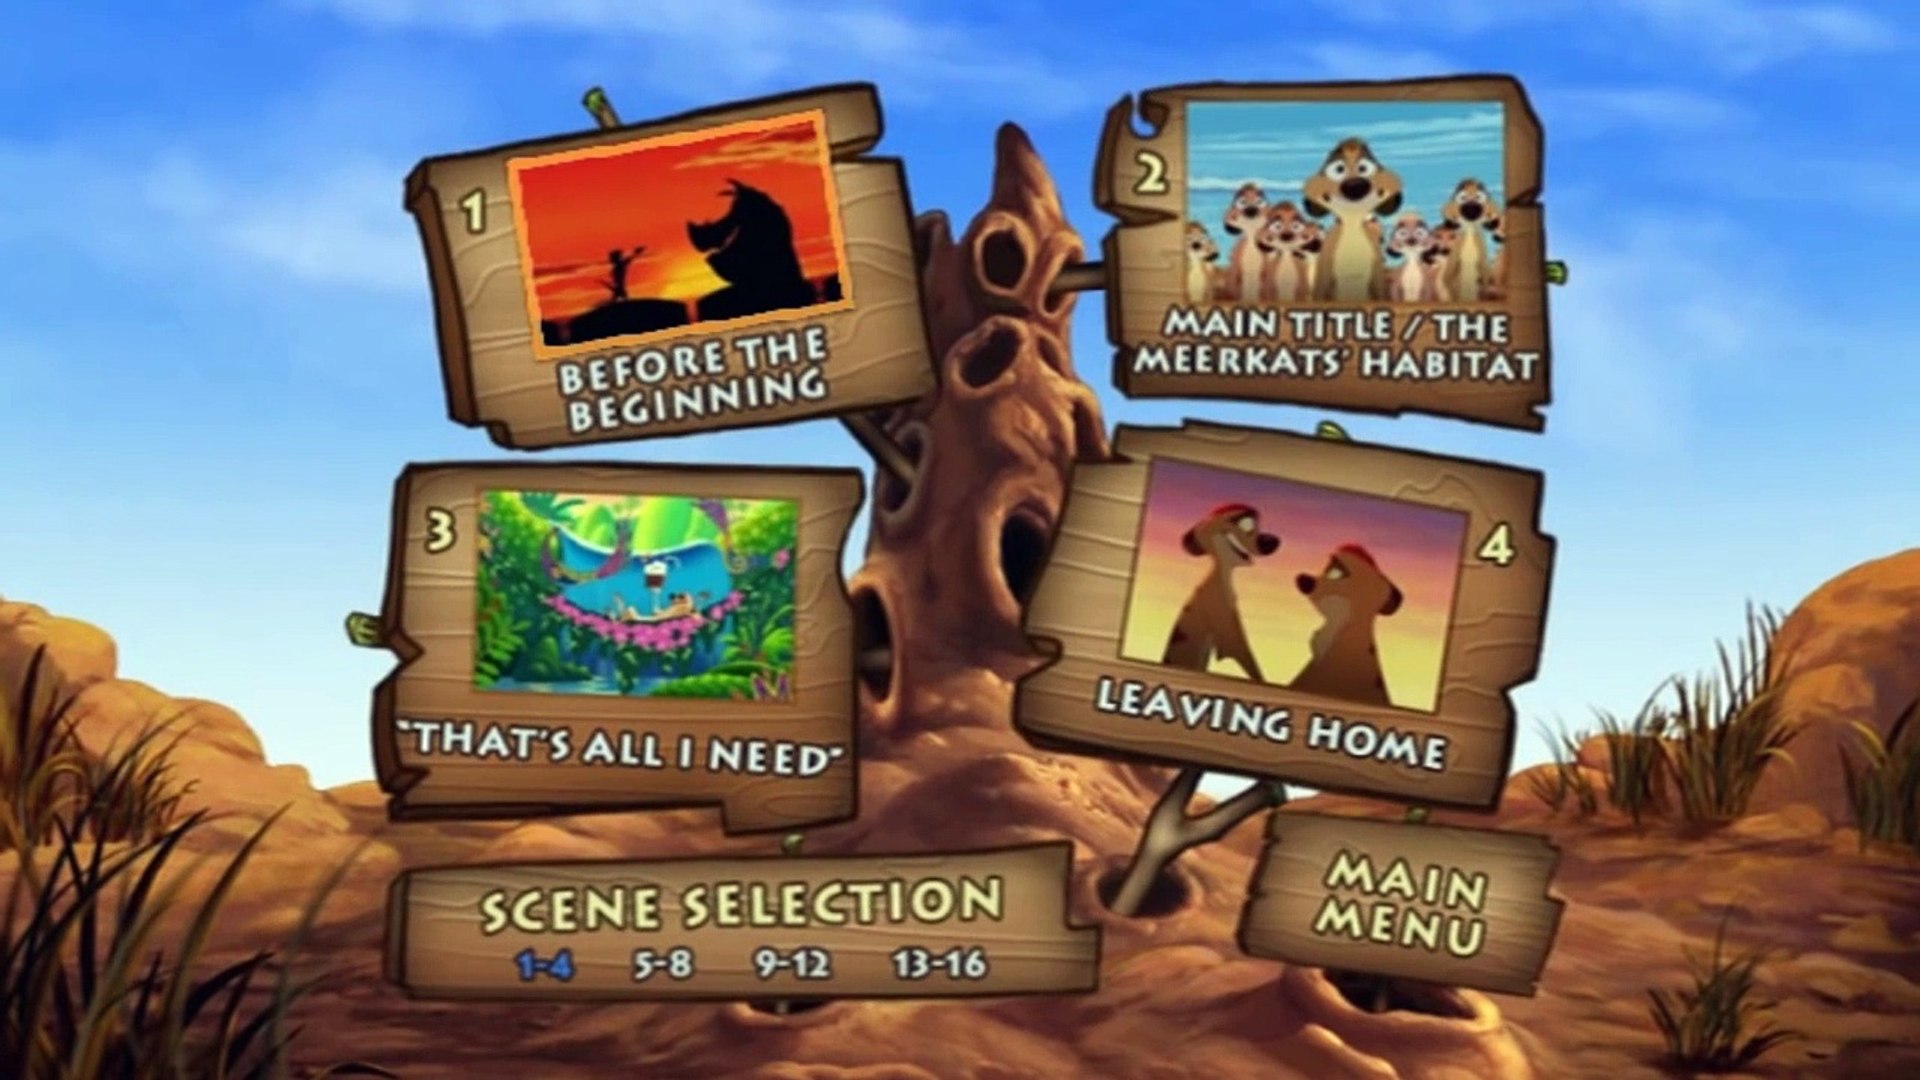 The Lion King 1 1/2 (2004) DvD Menu Walkthrough & Timon and Pumbaas Virtual  Safari 1.5 - video Dailymotion